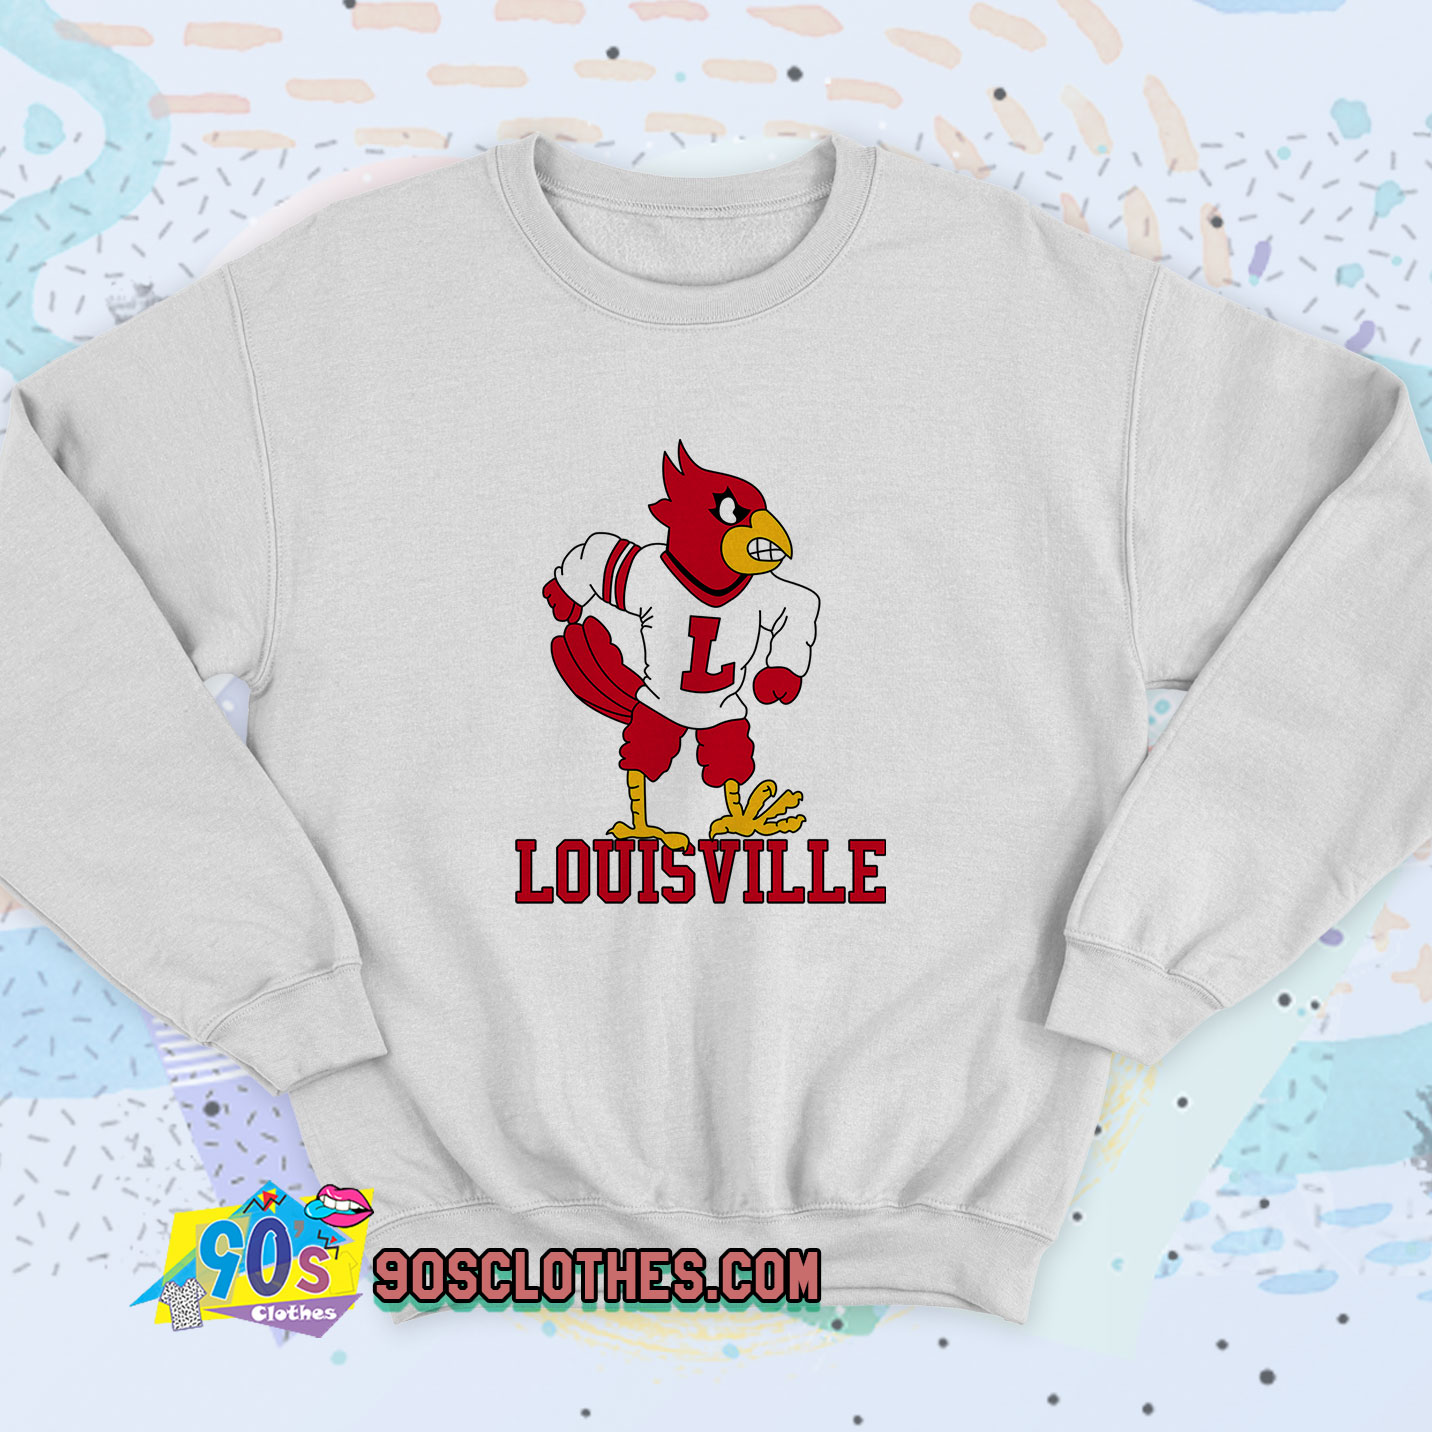 Vintage Louisville Cardinals College Sweatshirt, Size Medium – Stuck In The  90s Sports